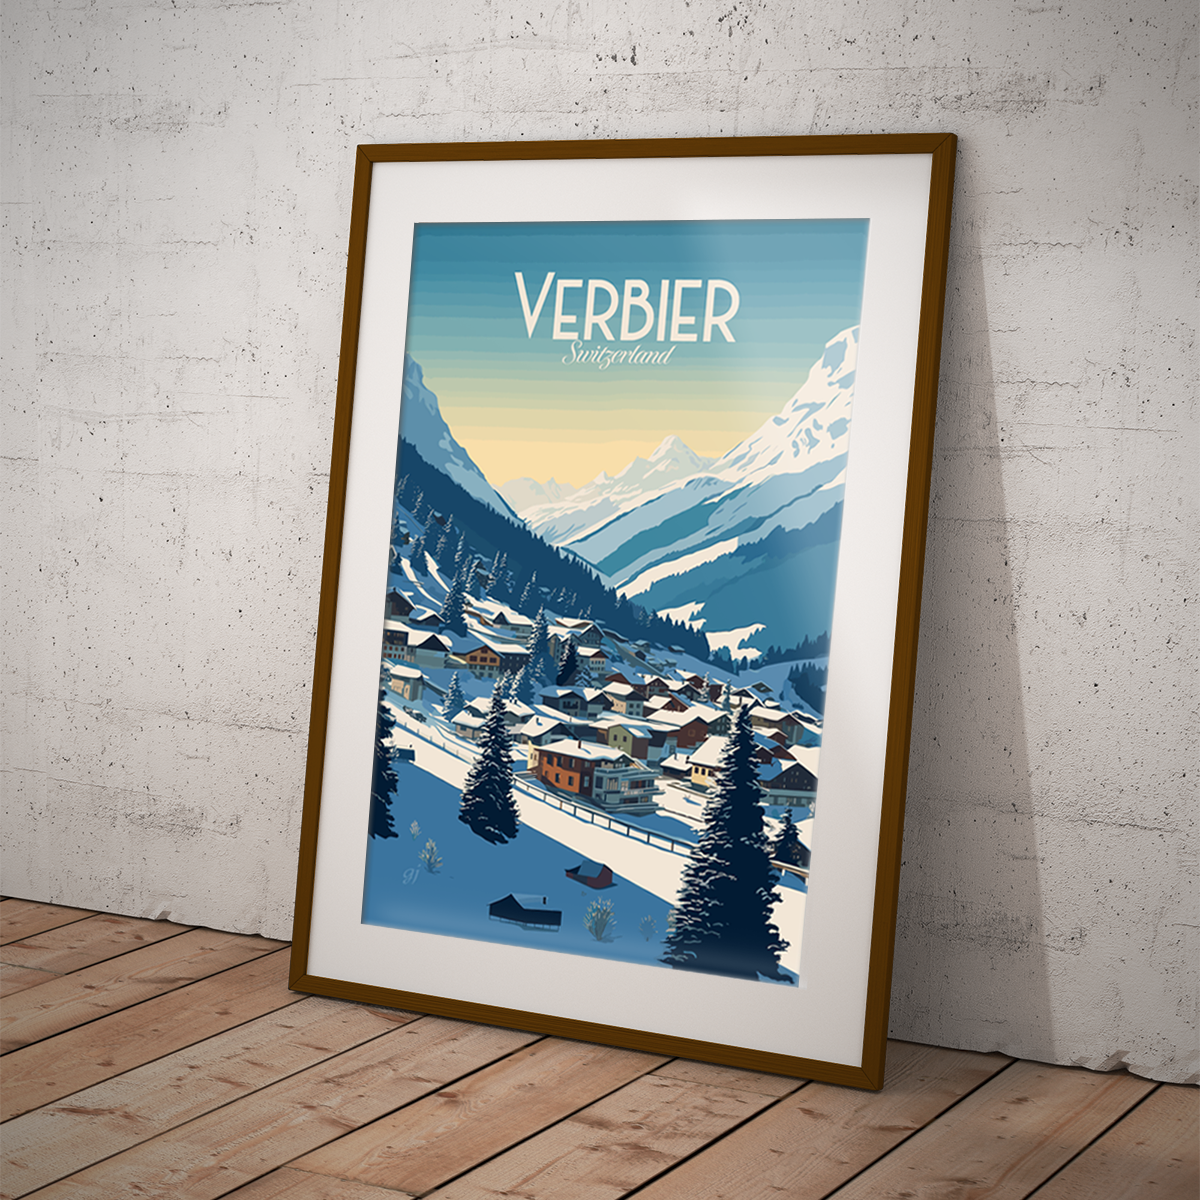 Verbier poster by bon voyage design